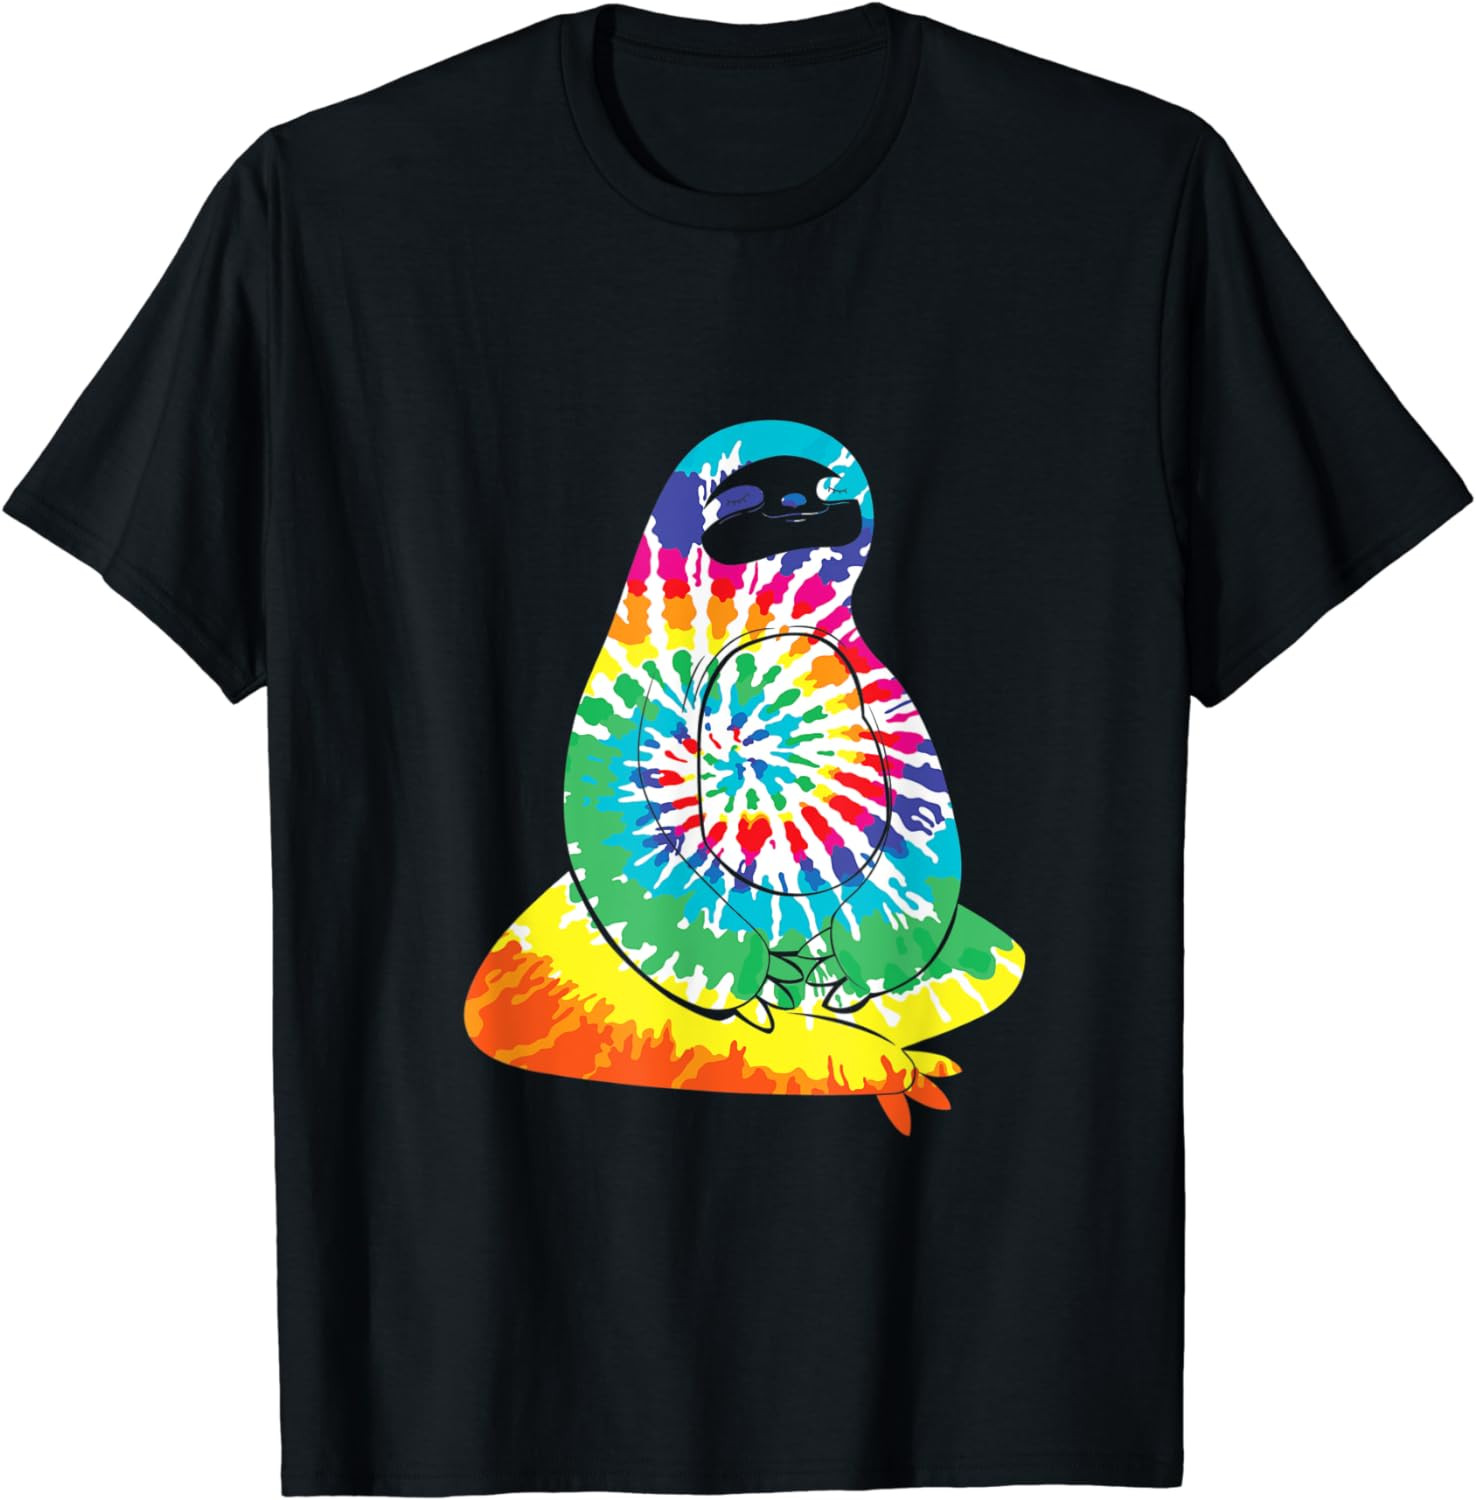 Tie Dye Sloth Shirt, Tie Dyed Print T-Shirt Meditation